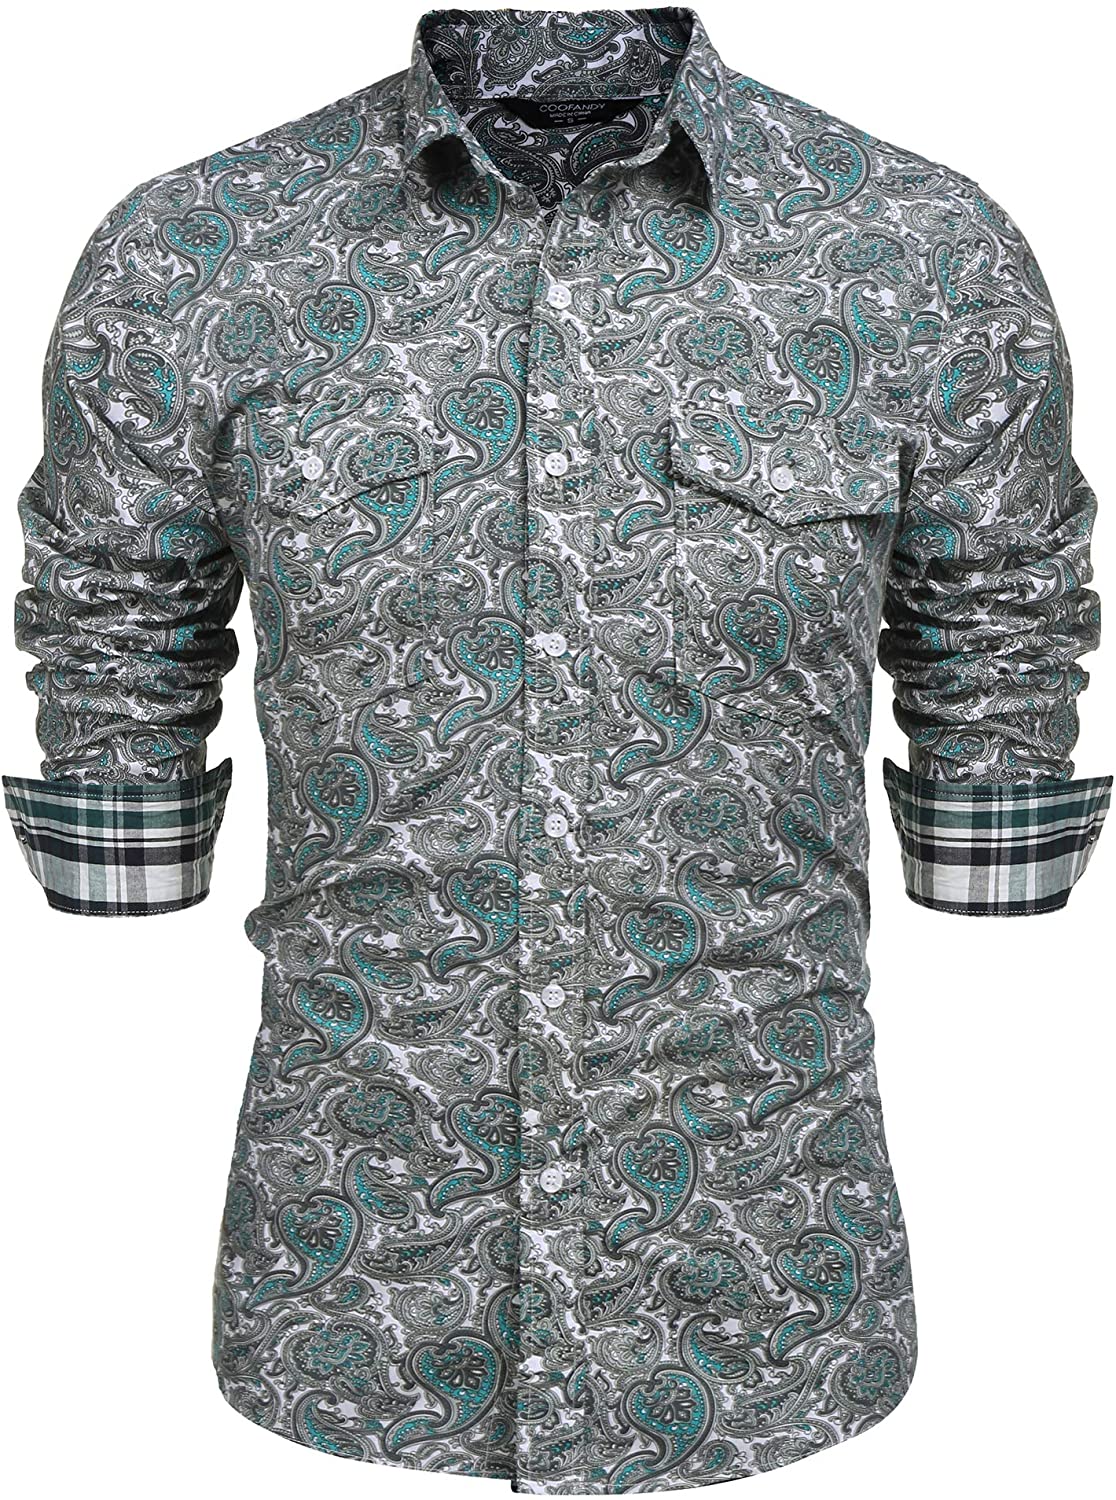 COOFANDY Mens Floral Dress Shirt Slim Fit Casual Paisley Printed Shirt Long Sleeve Button Down Shirts